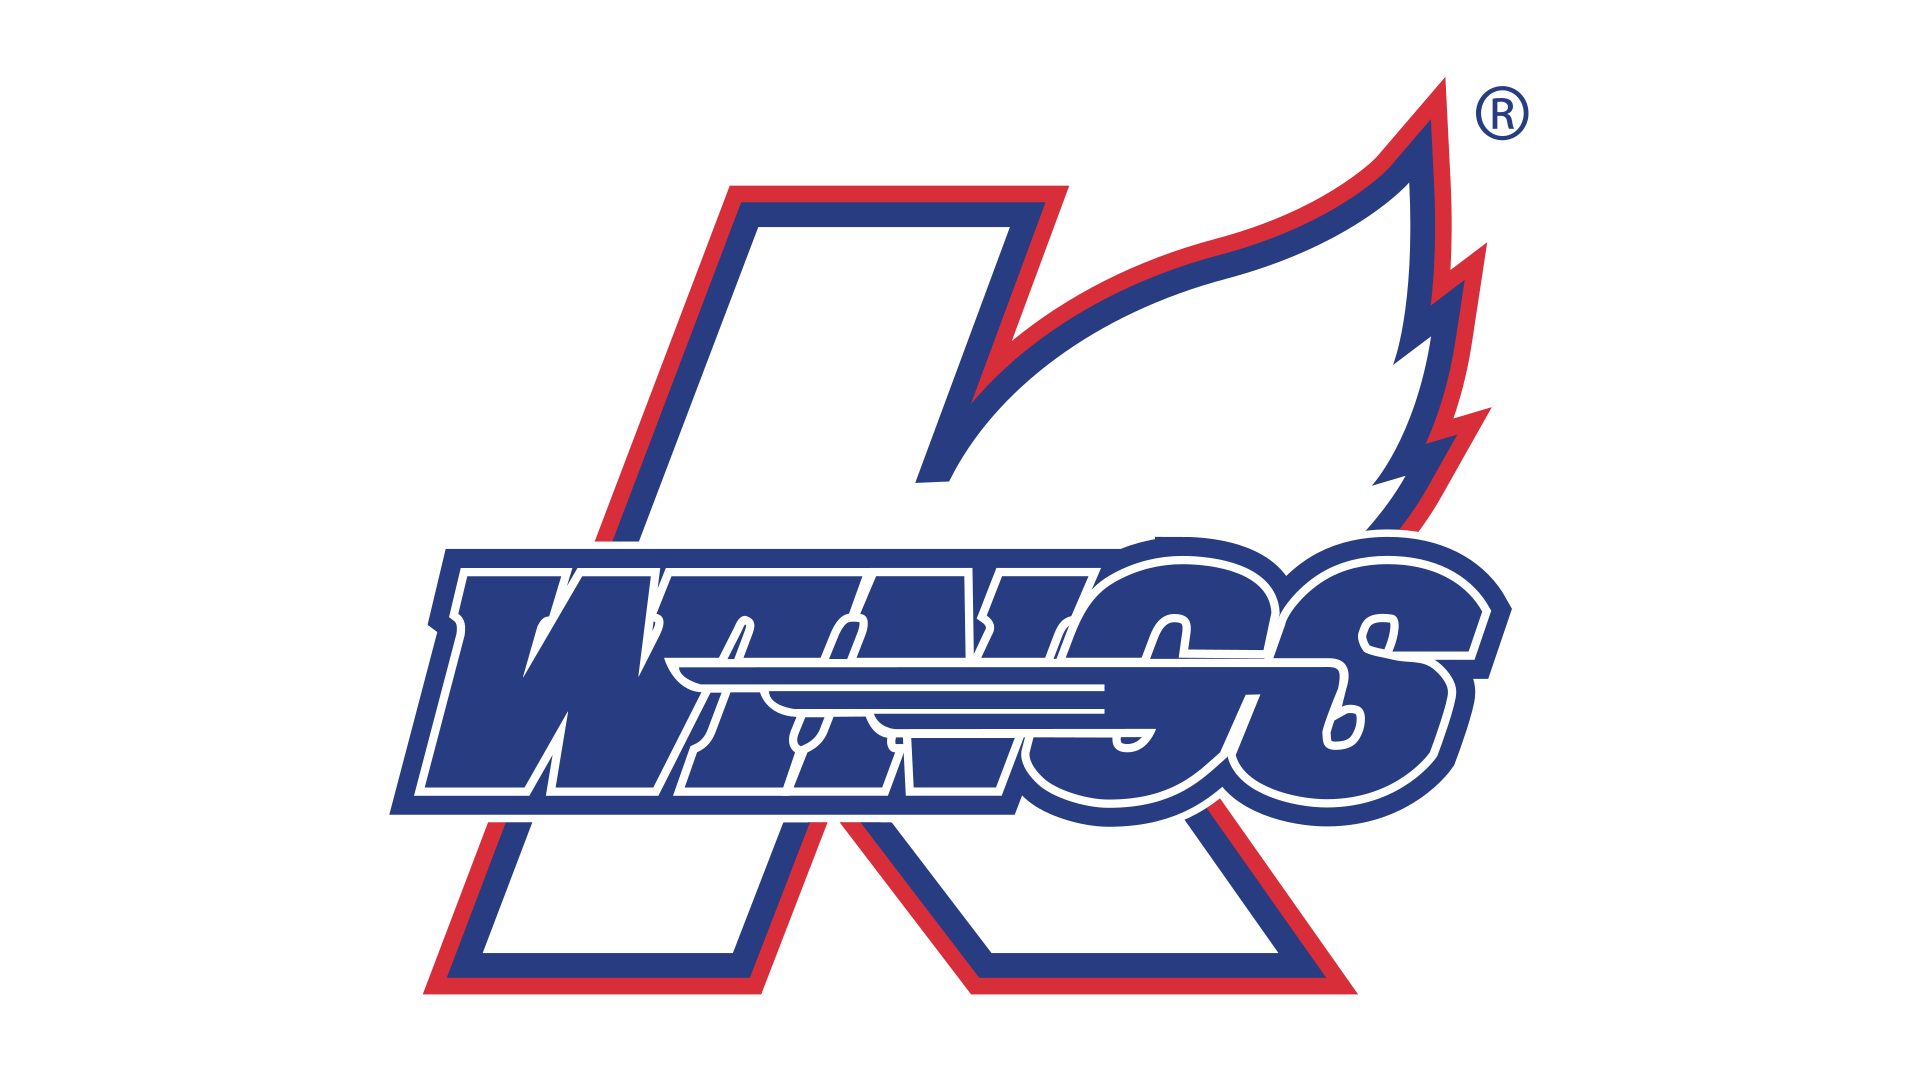 Kalamazoo Logo - Meaning Kalamazoo Wings logo and symbol | history and evolution